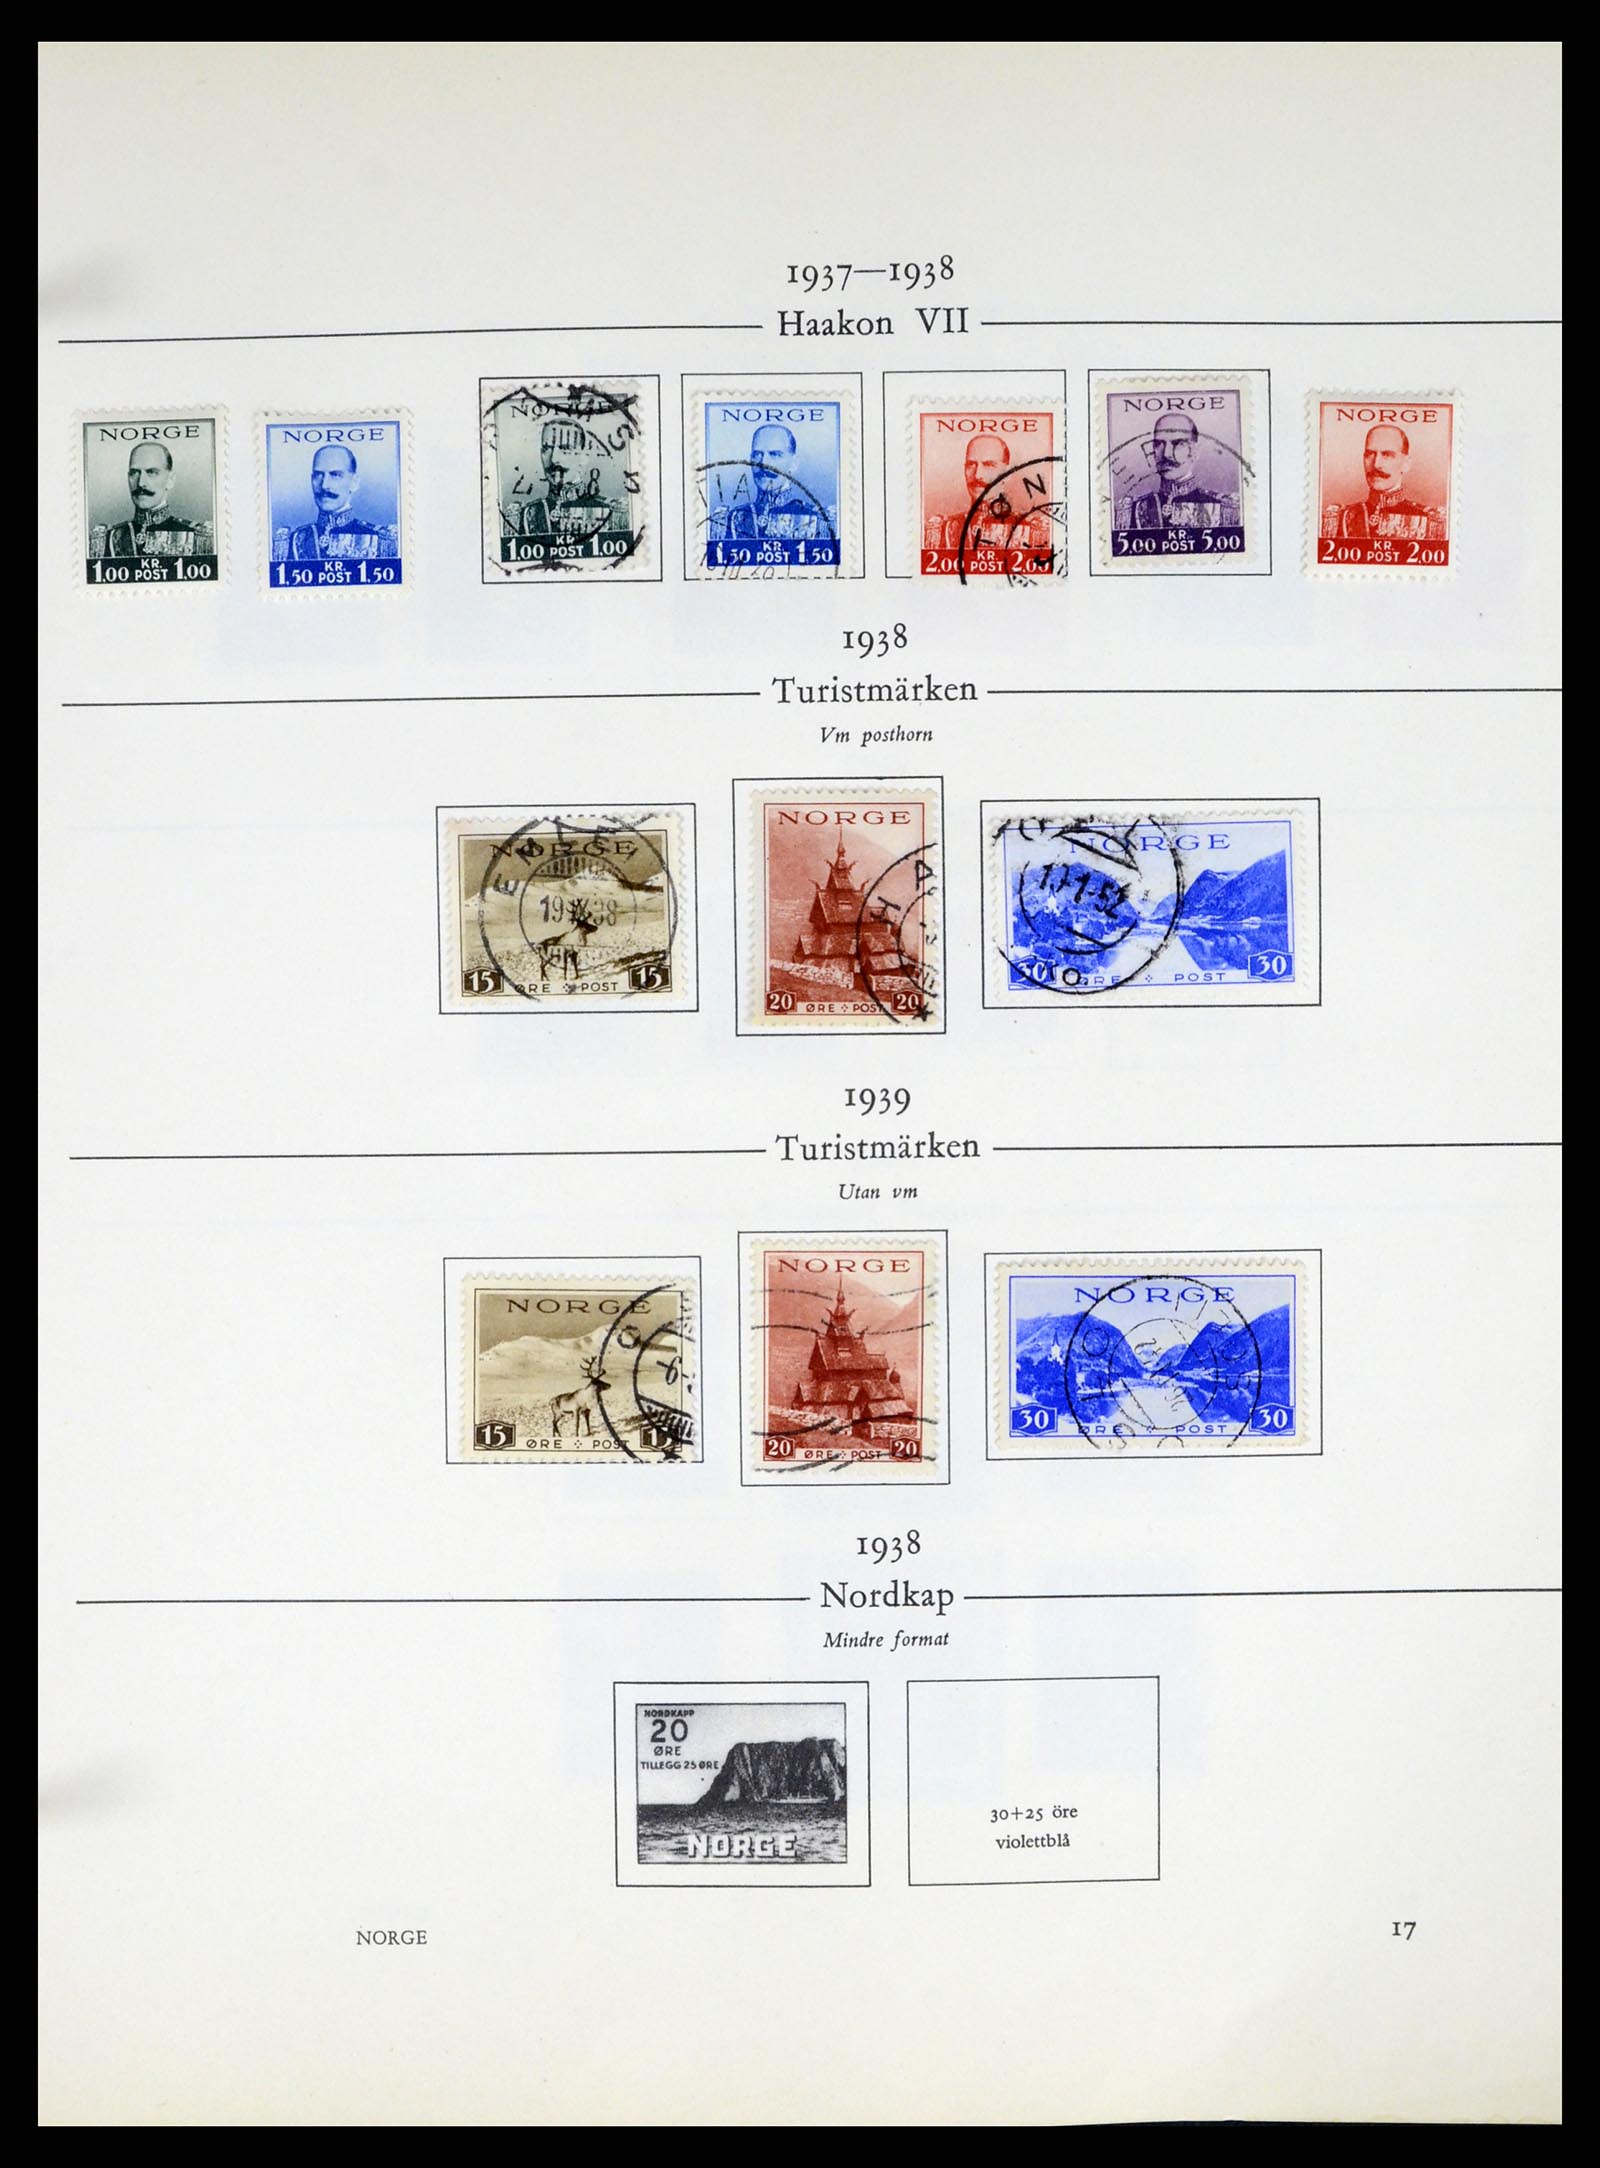 37387 017 - Stamp collection 37387 Scandinavia 1851-1960.